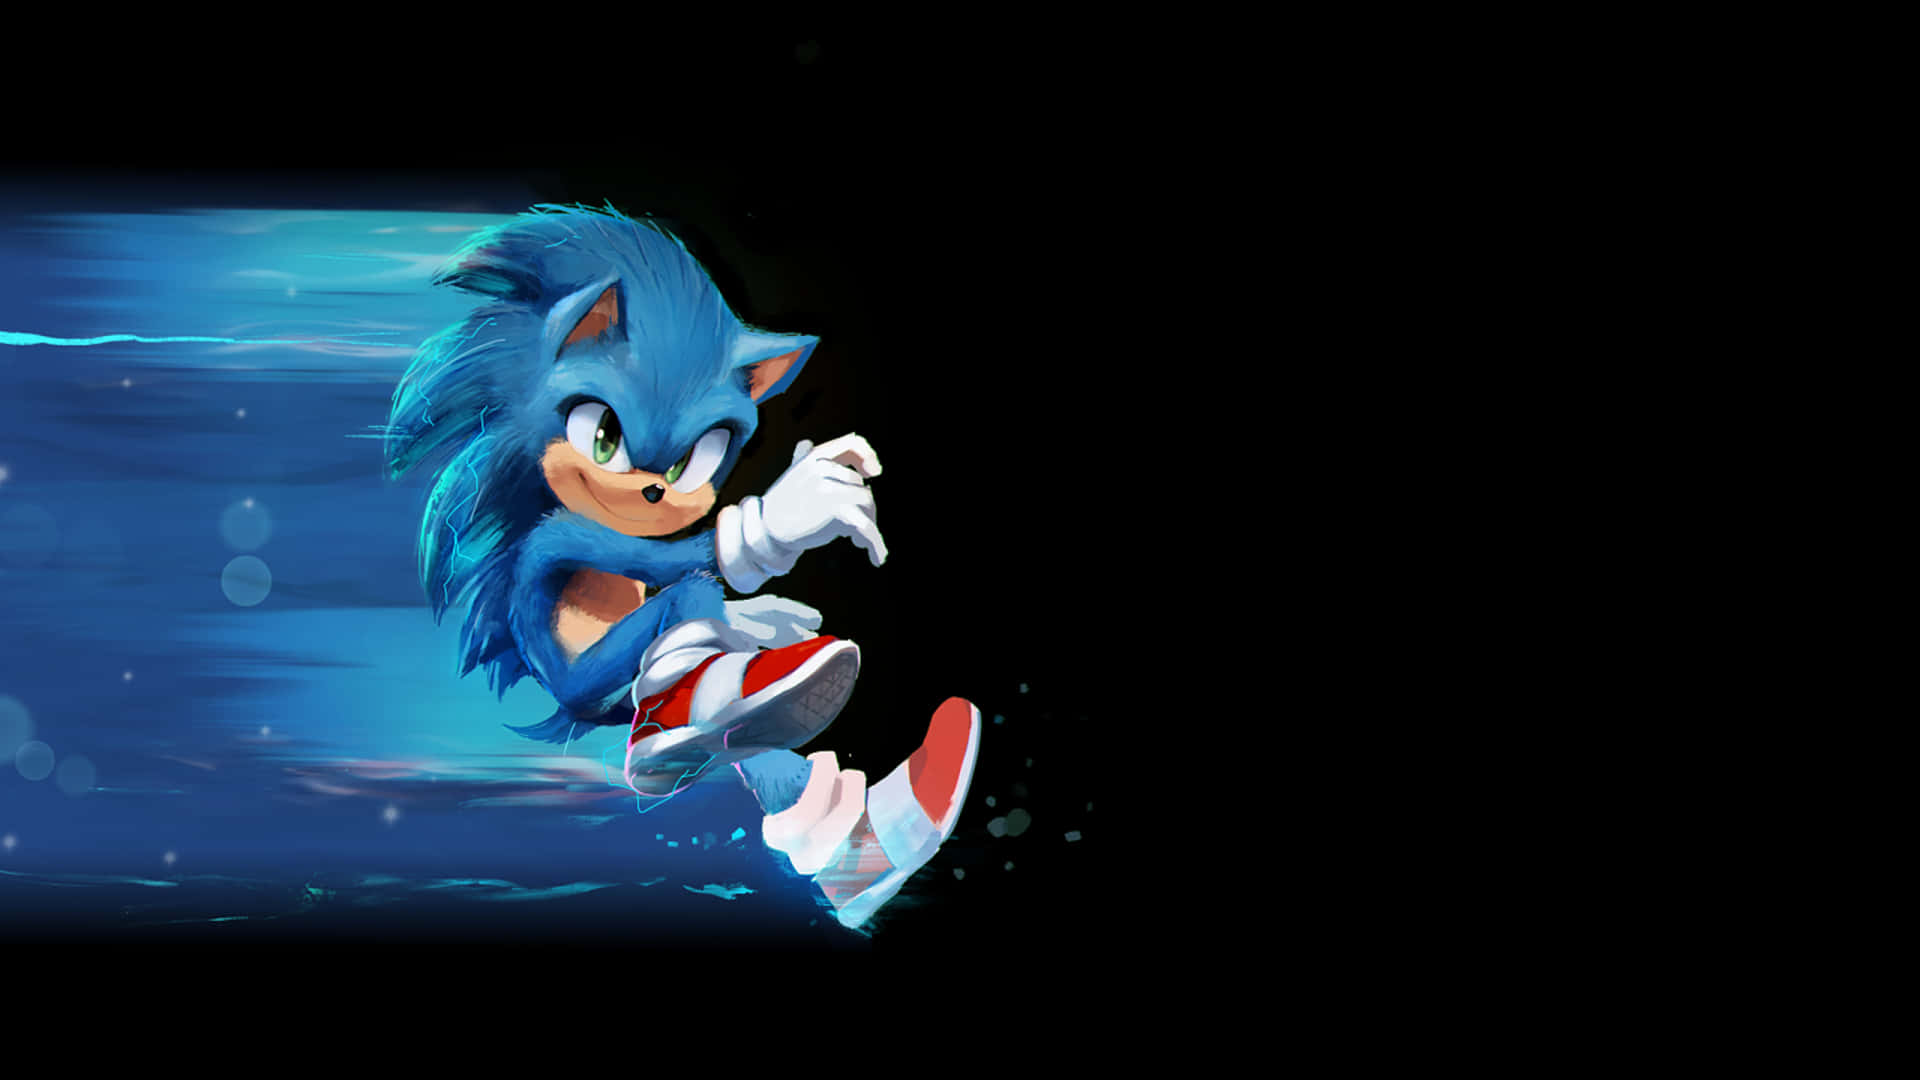 Bildklassiska Sonic The Hedgehog